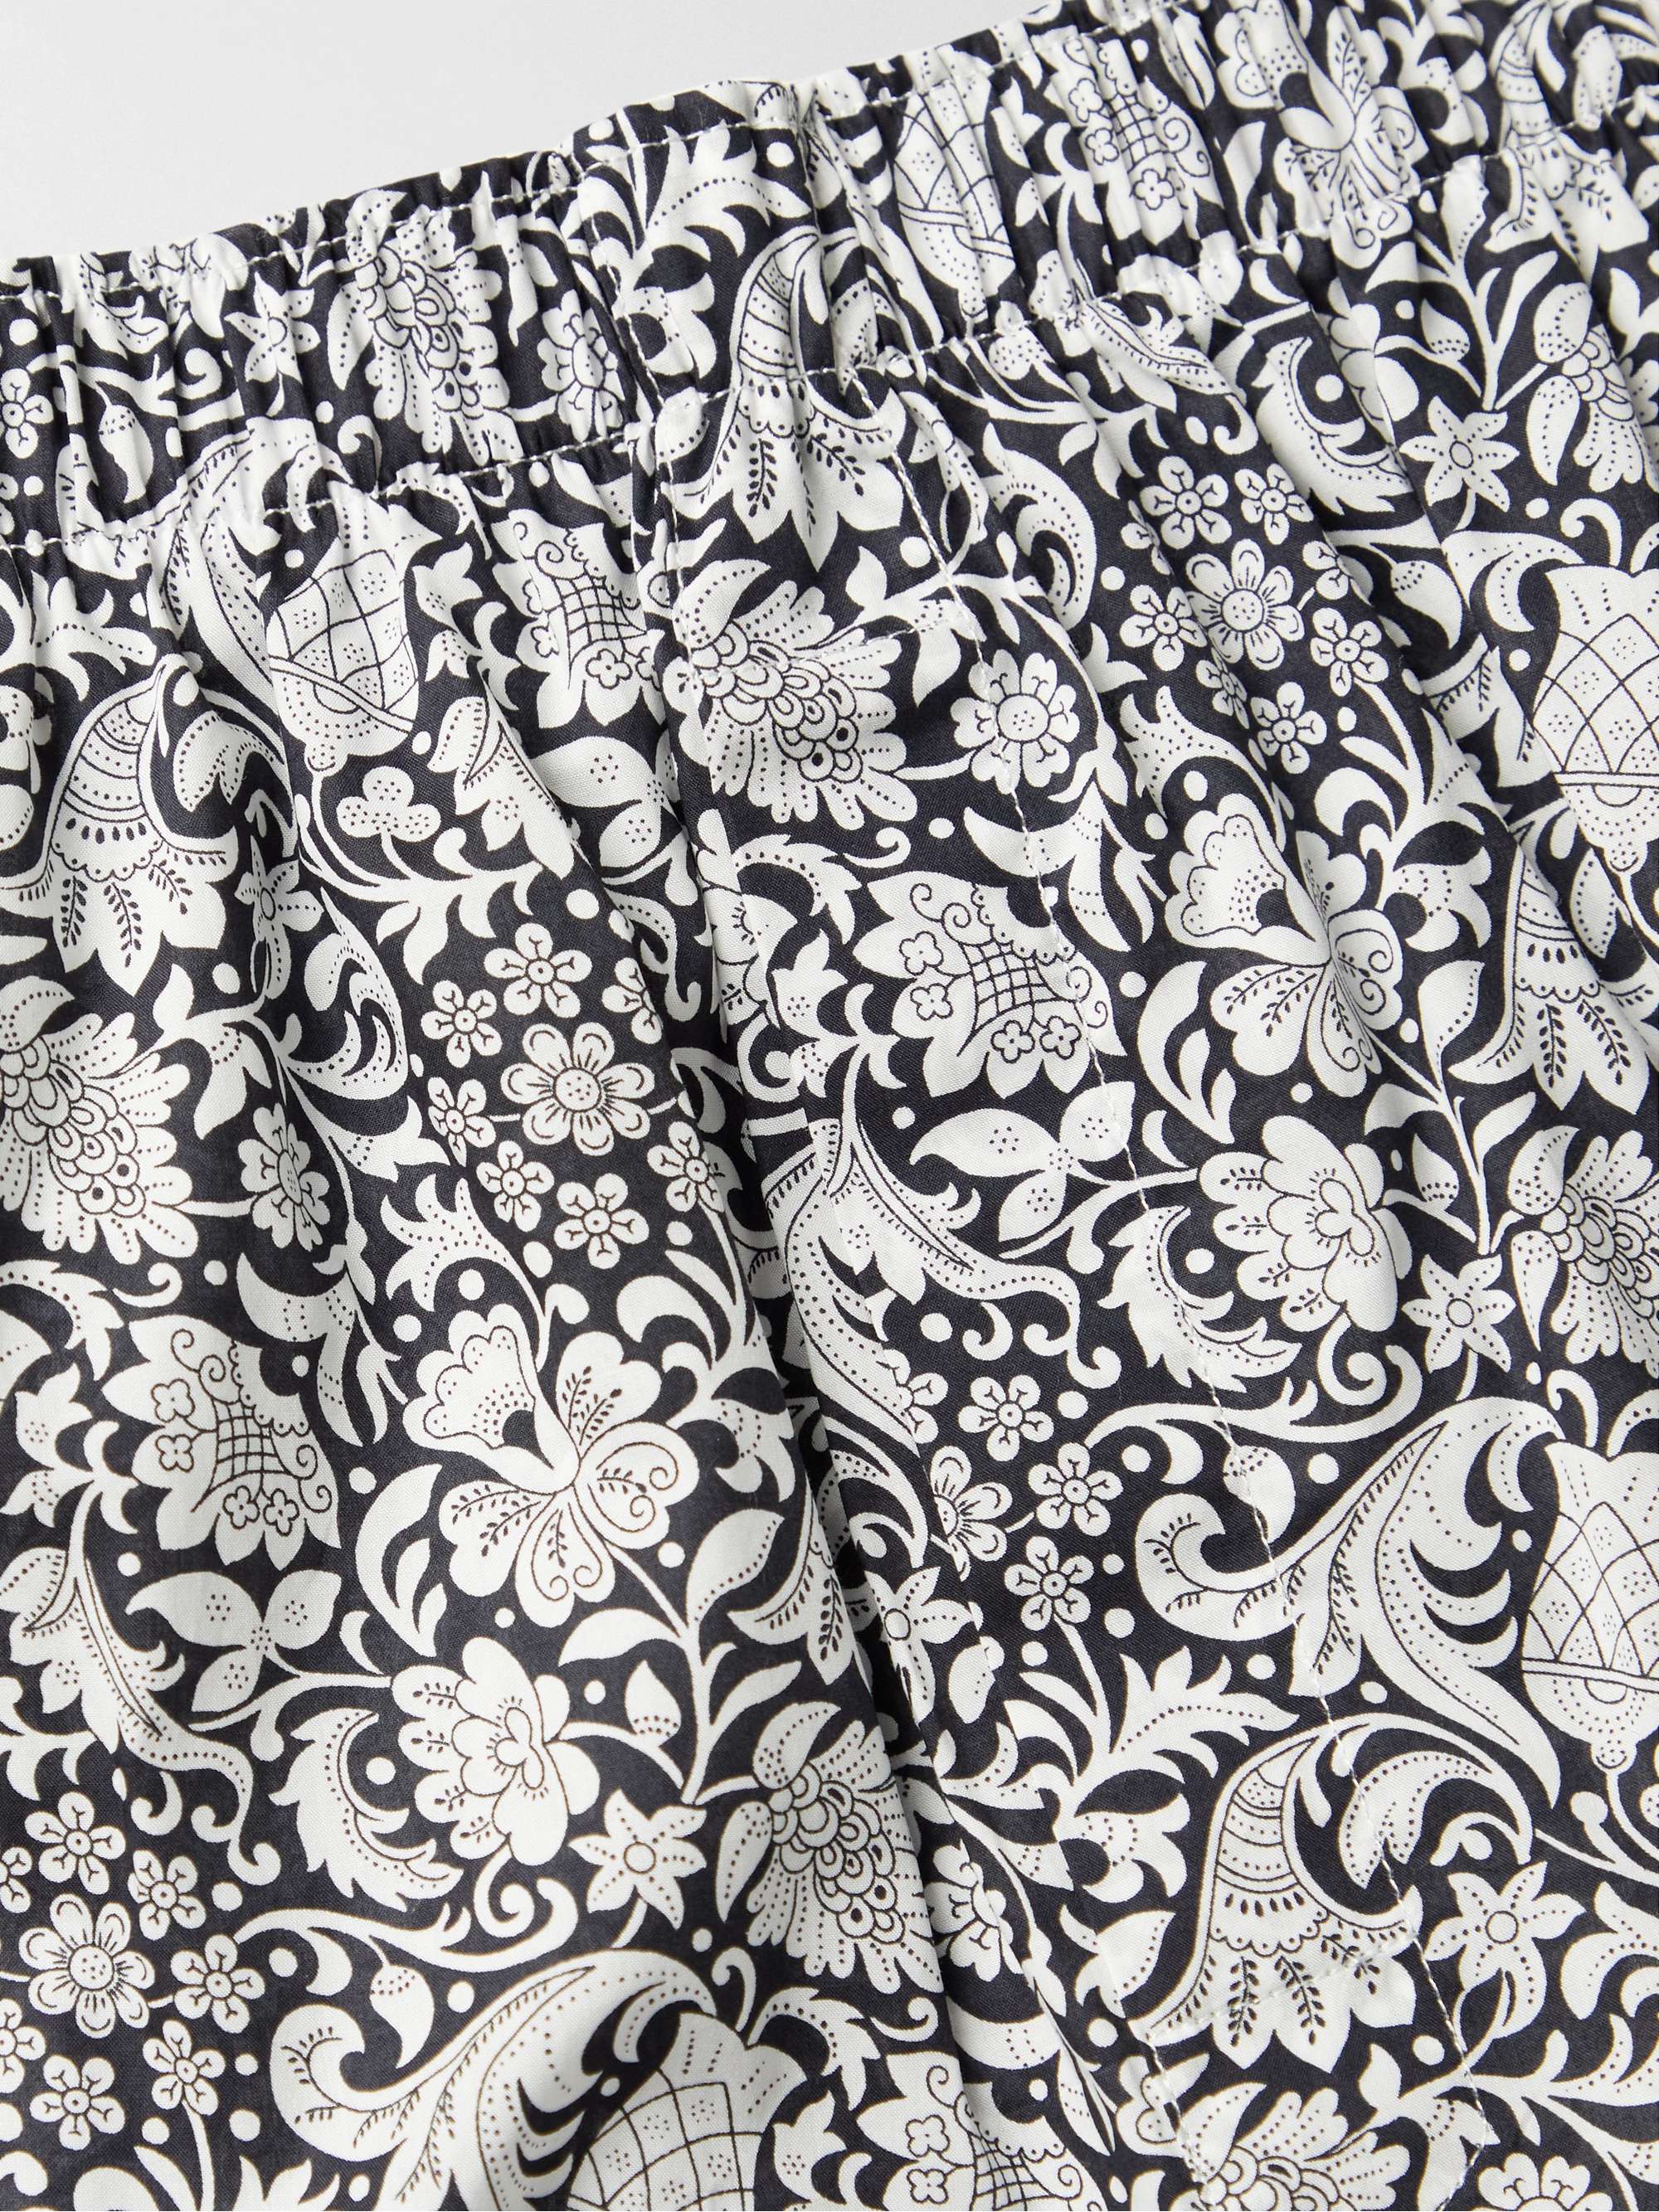 SUNSPEL + Liberty London Floral-Print Cotton Boxer Shorts